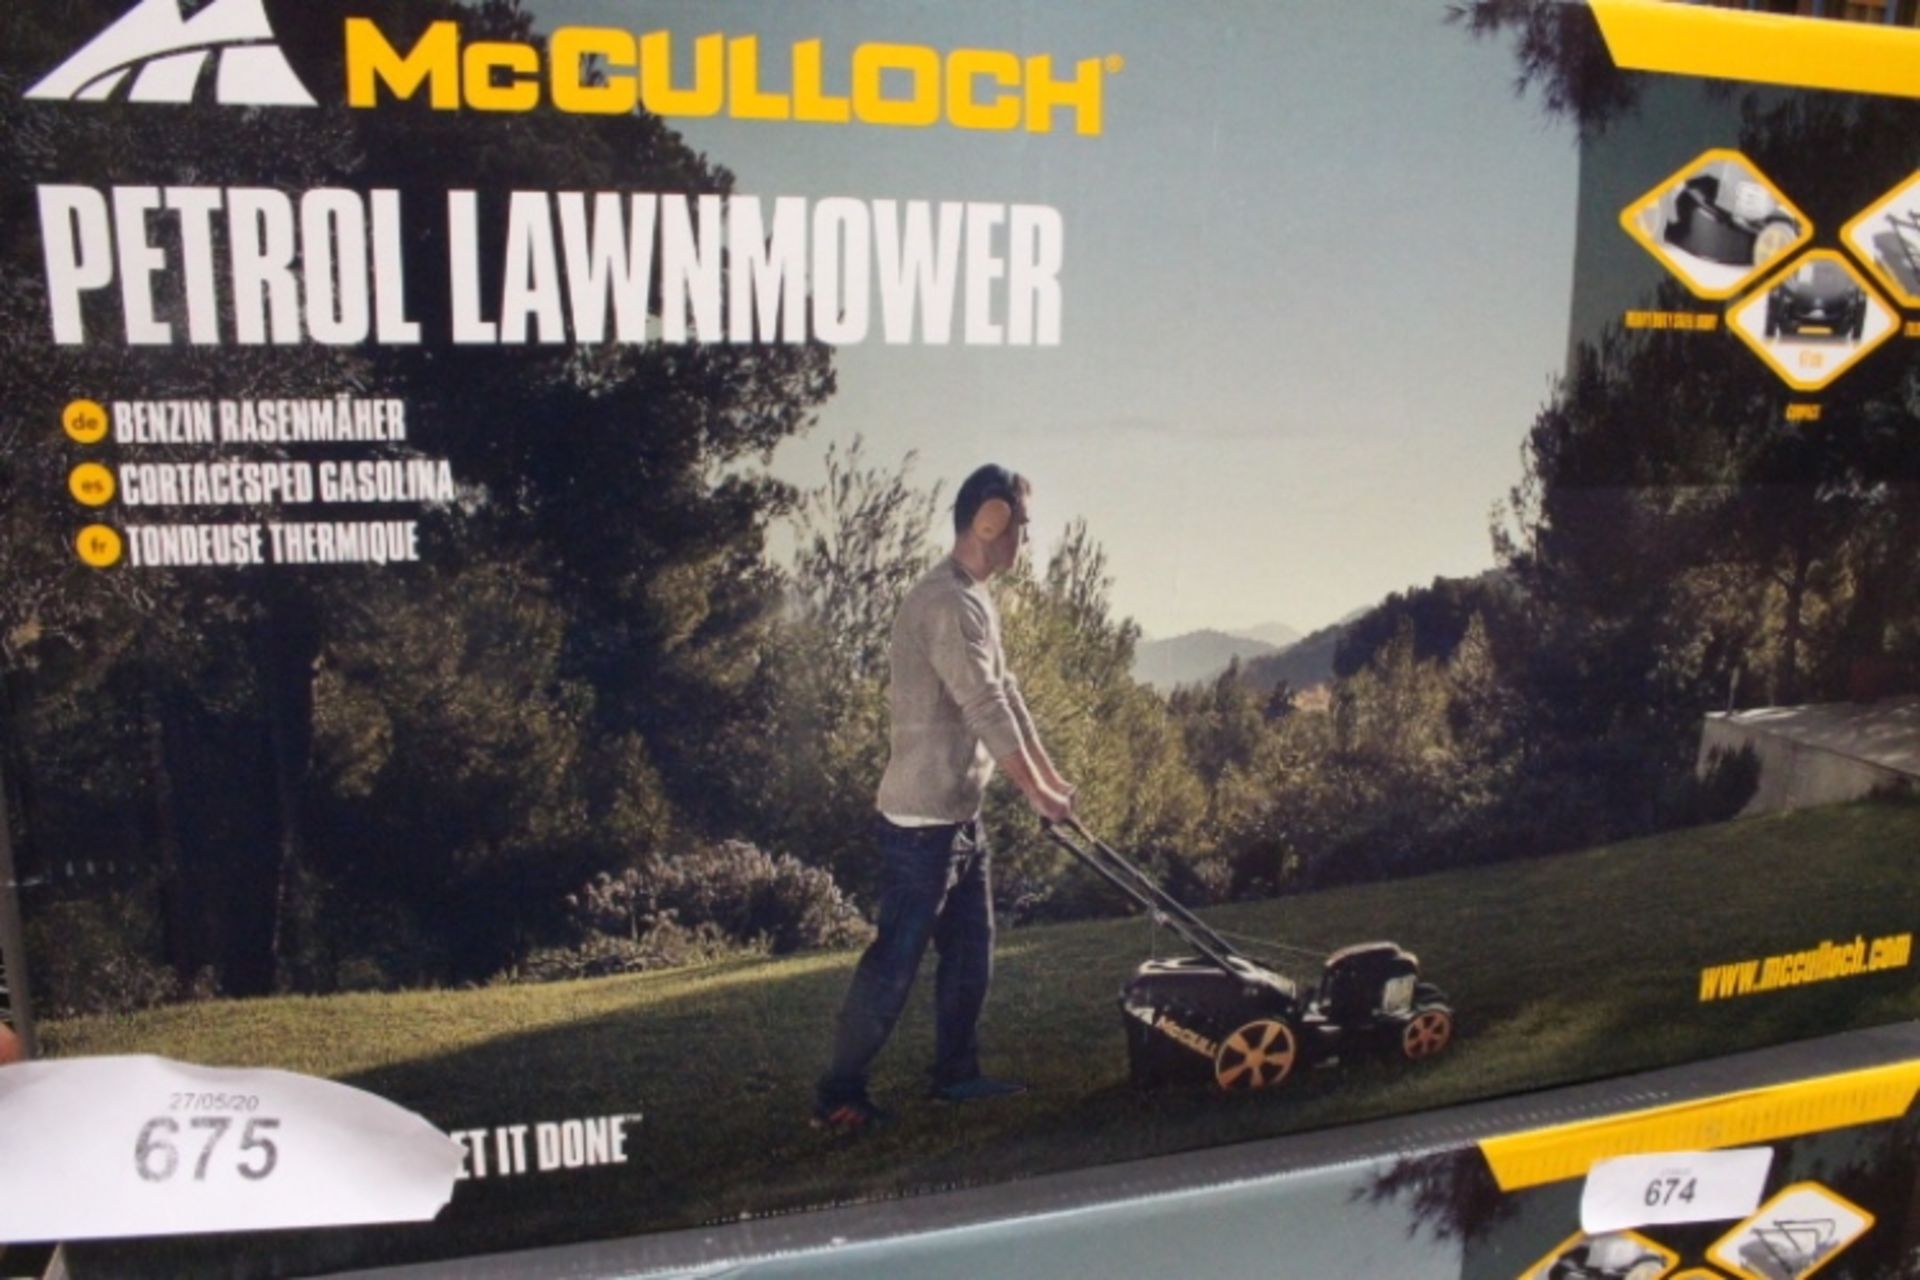 1 x McCulloch M40-125 petrol lawnmower, SKU: 967 1746-01 - Sealed new (GS36)